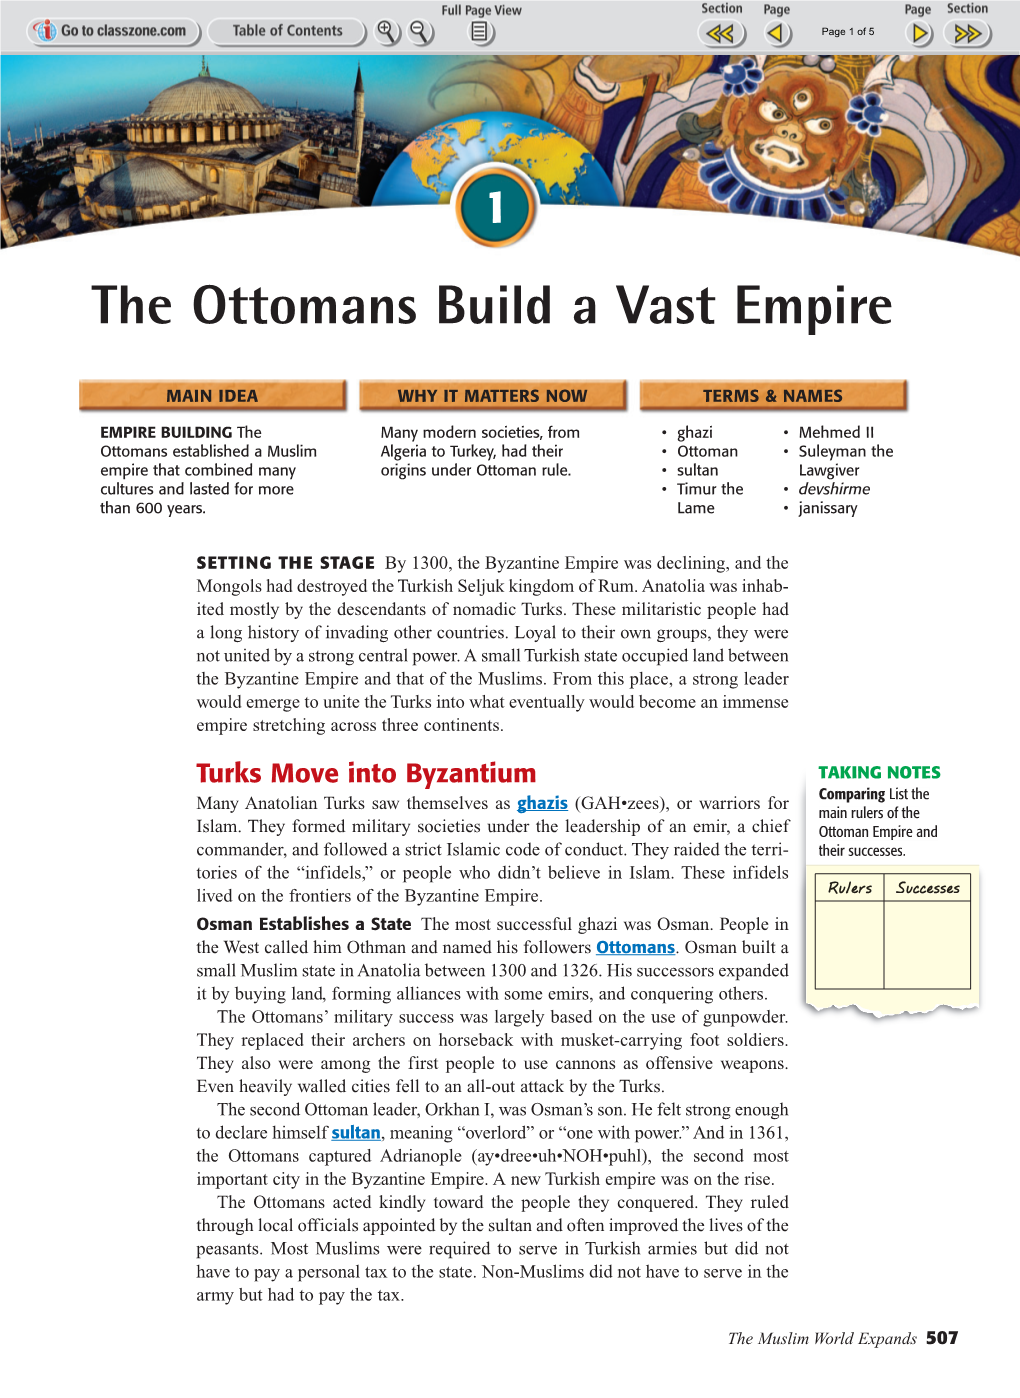 The Ottomans Build a Vast Empire